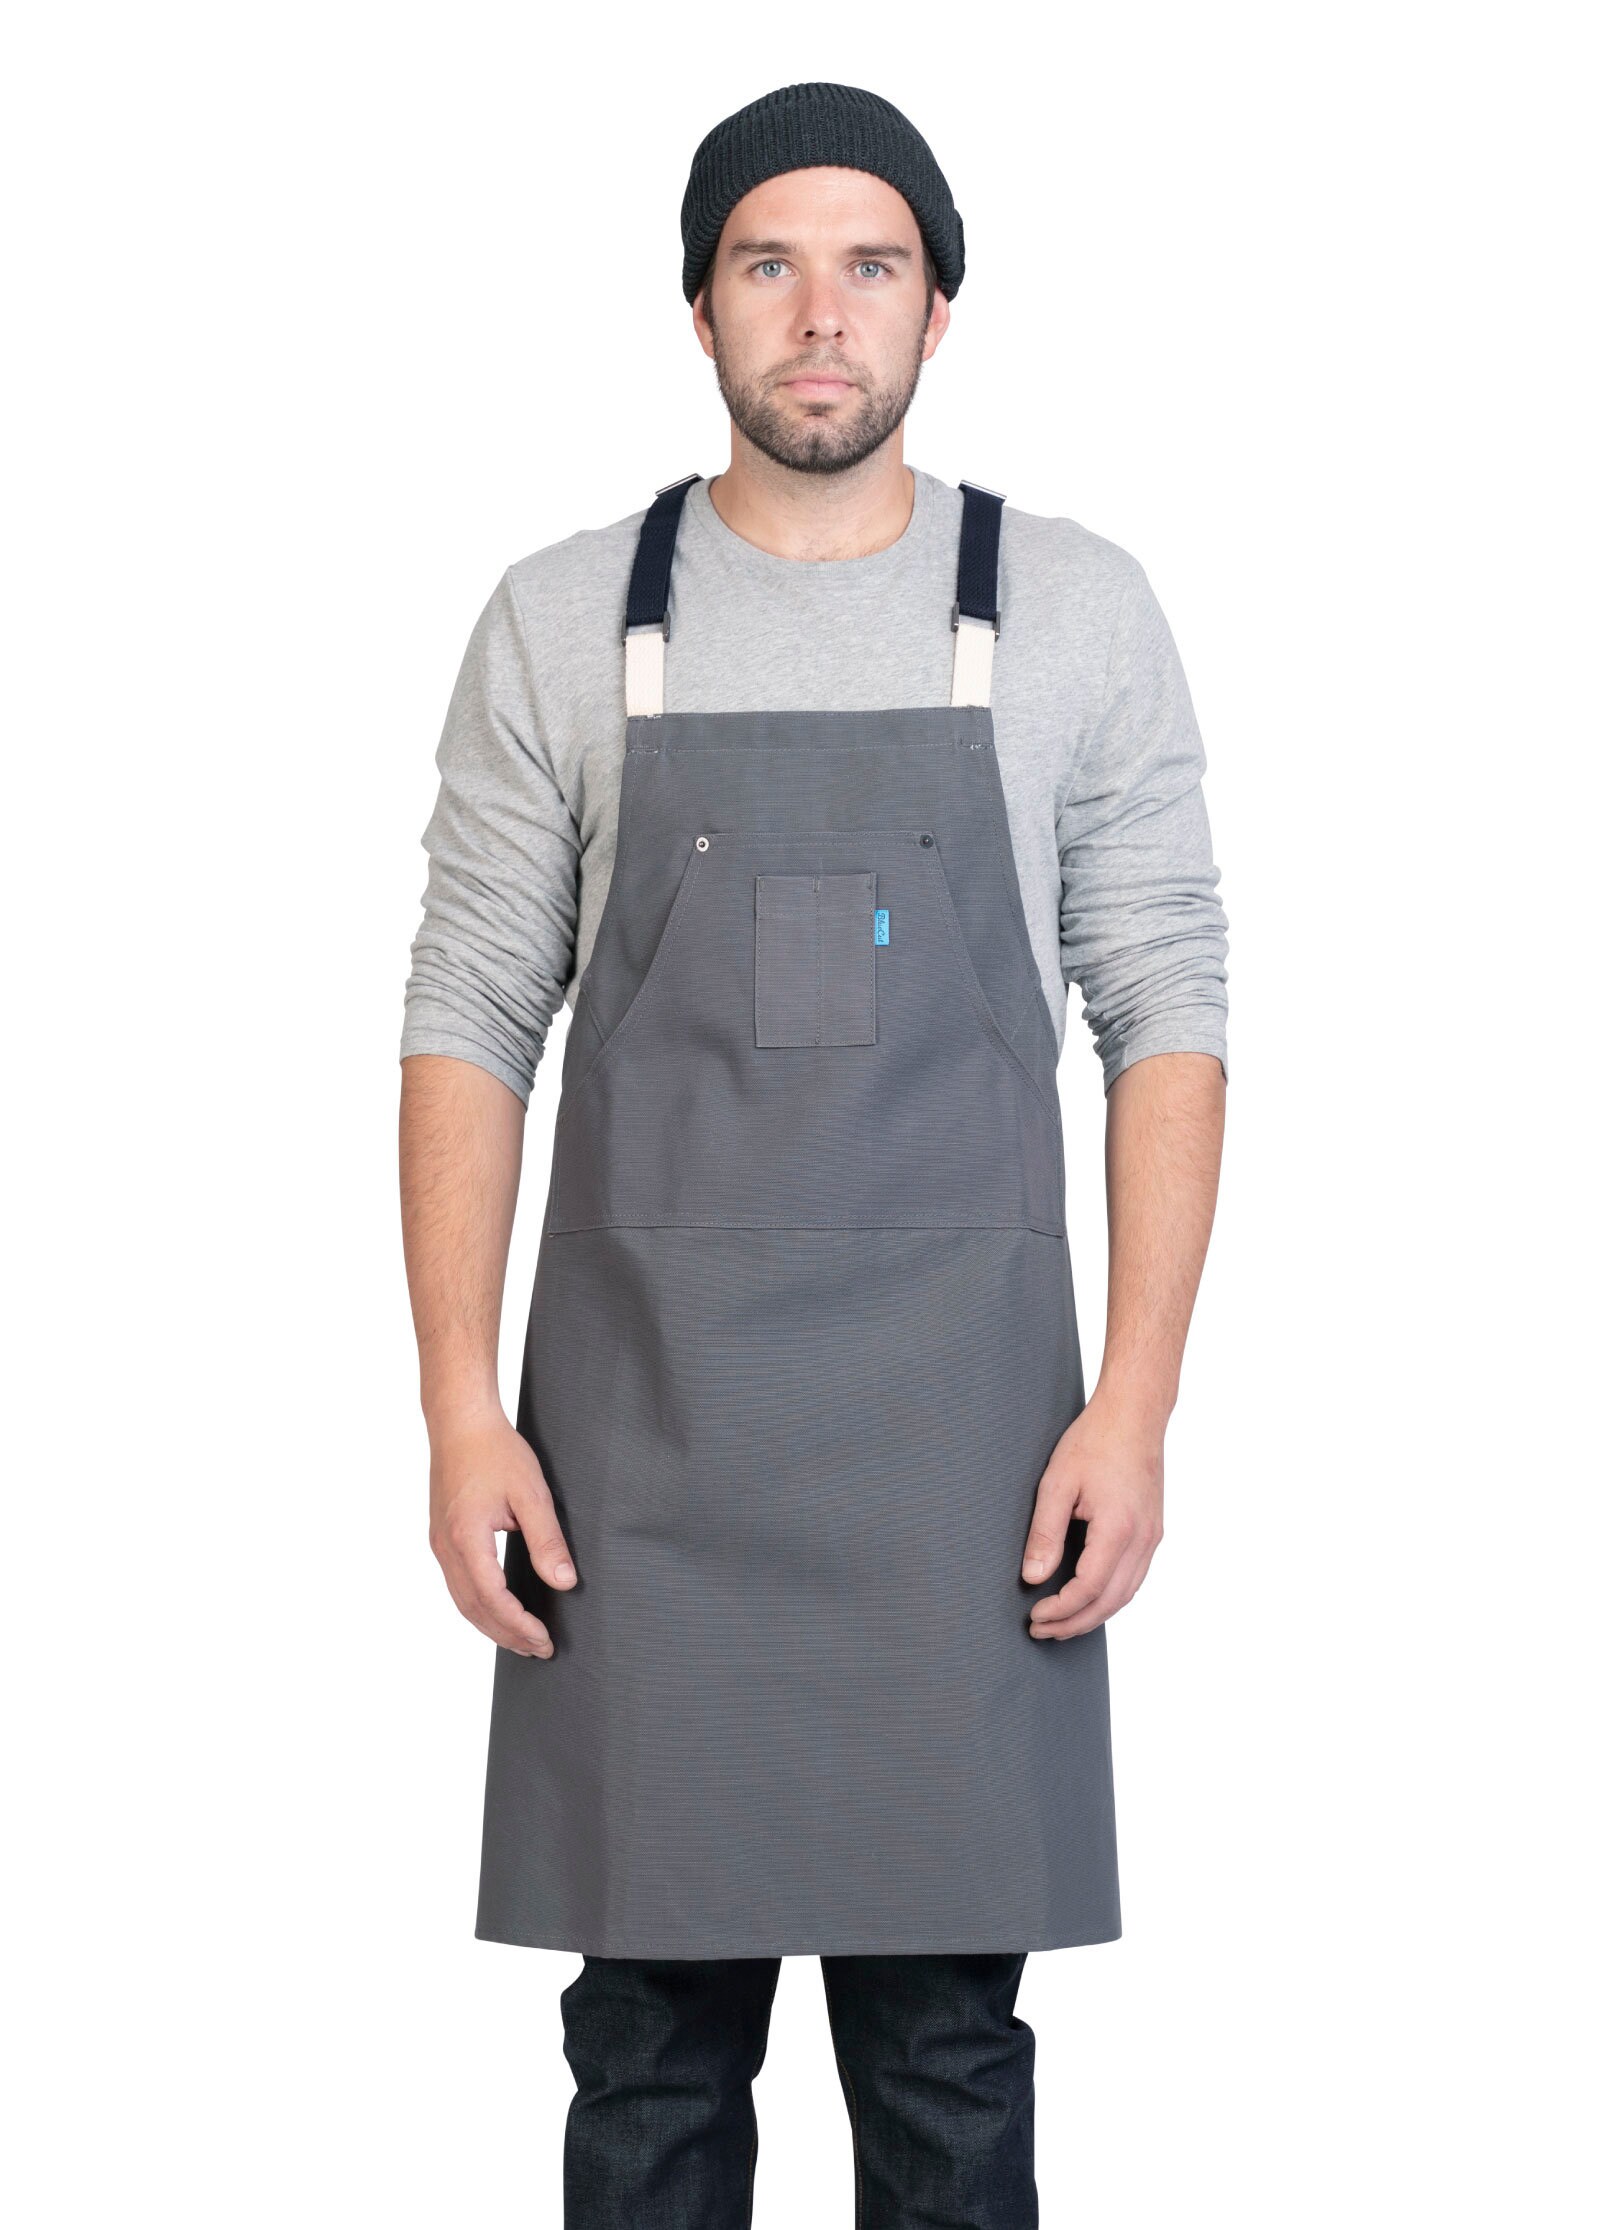 Cross-Strap Apron – Deluxe Leather Chef Apron